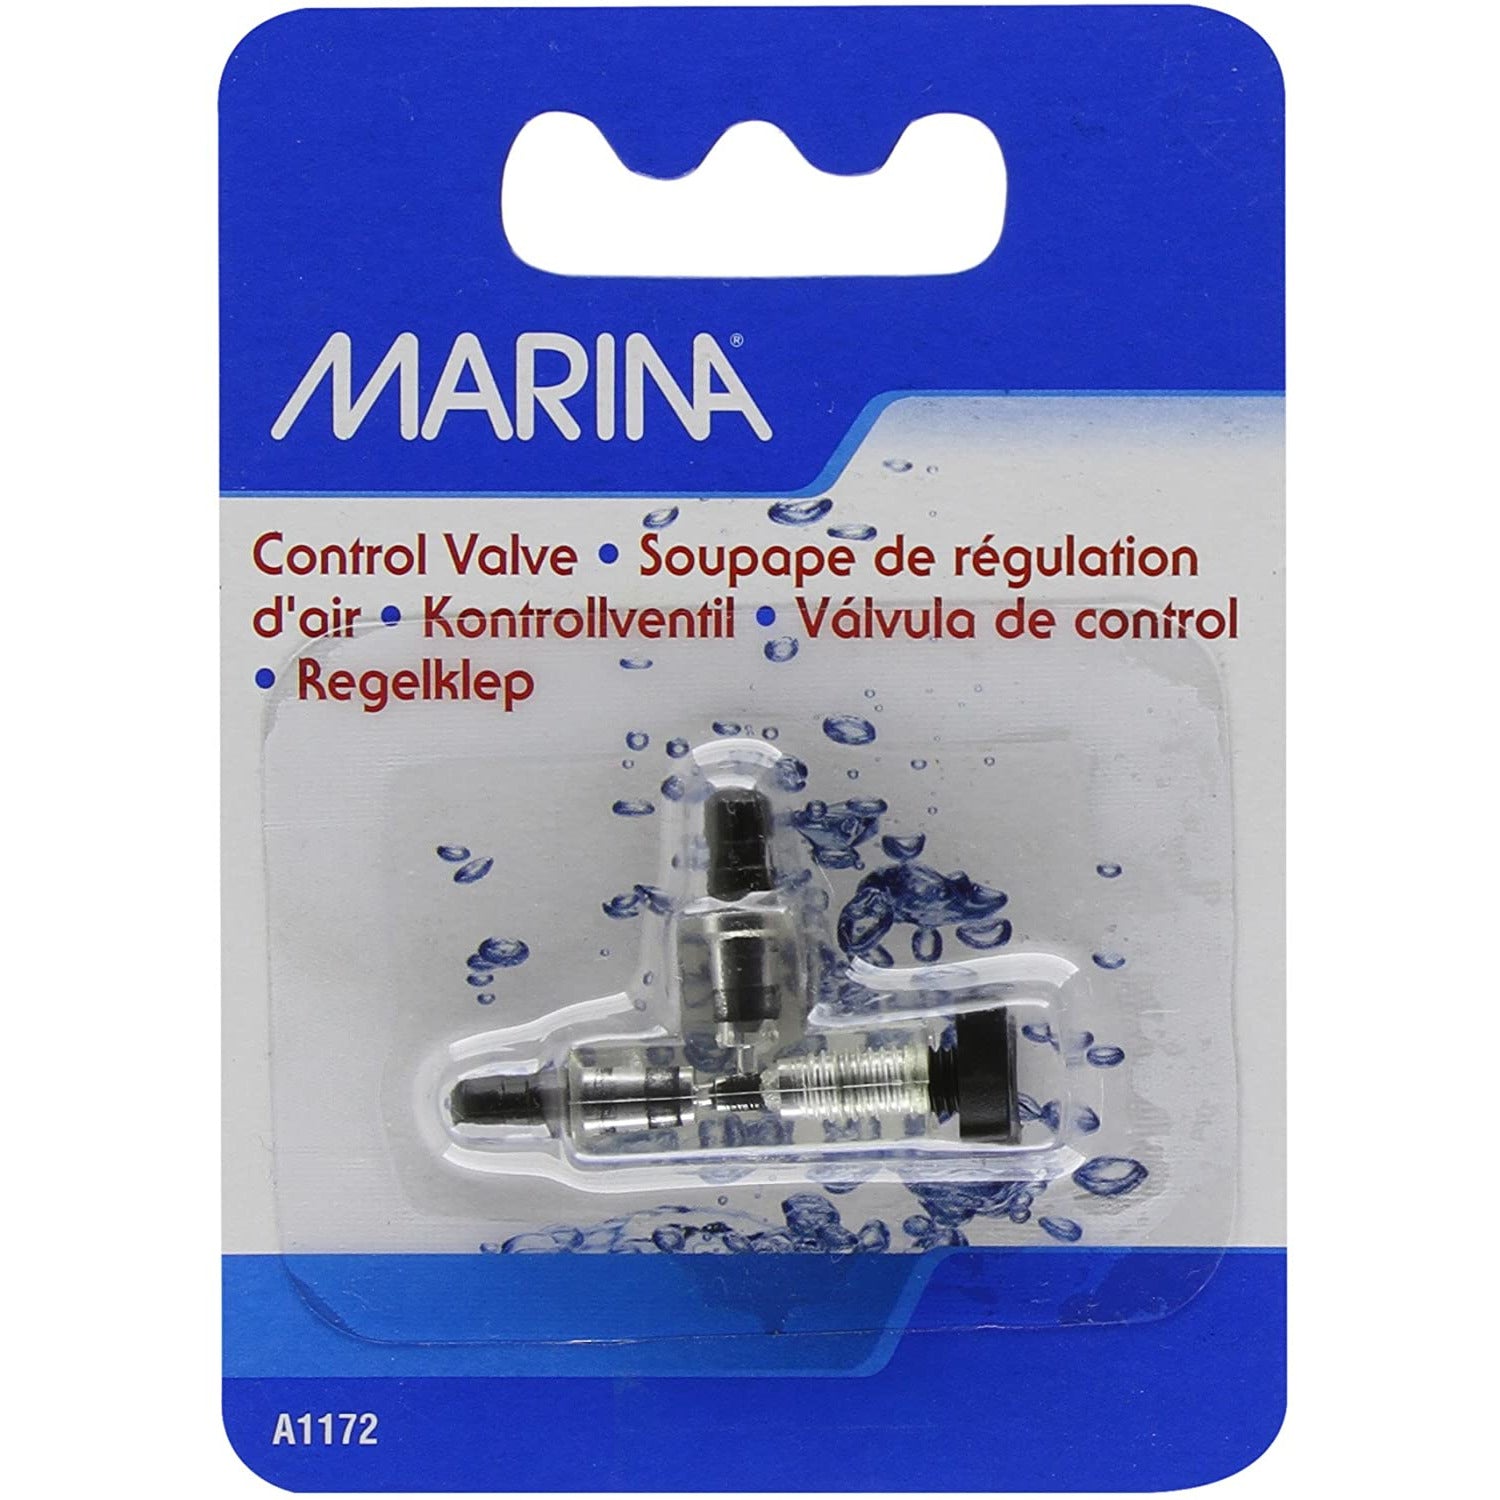 Marina Control Valve